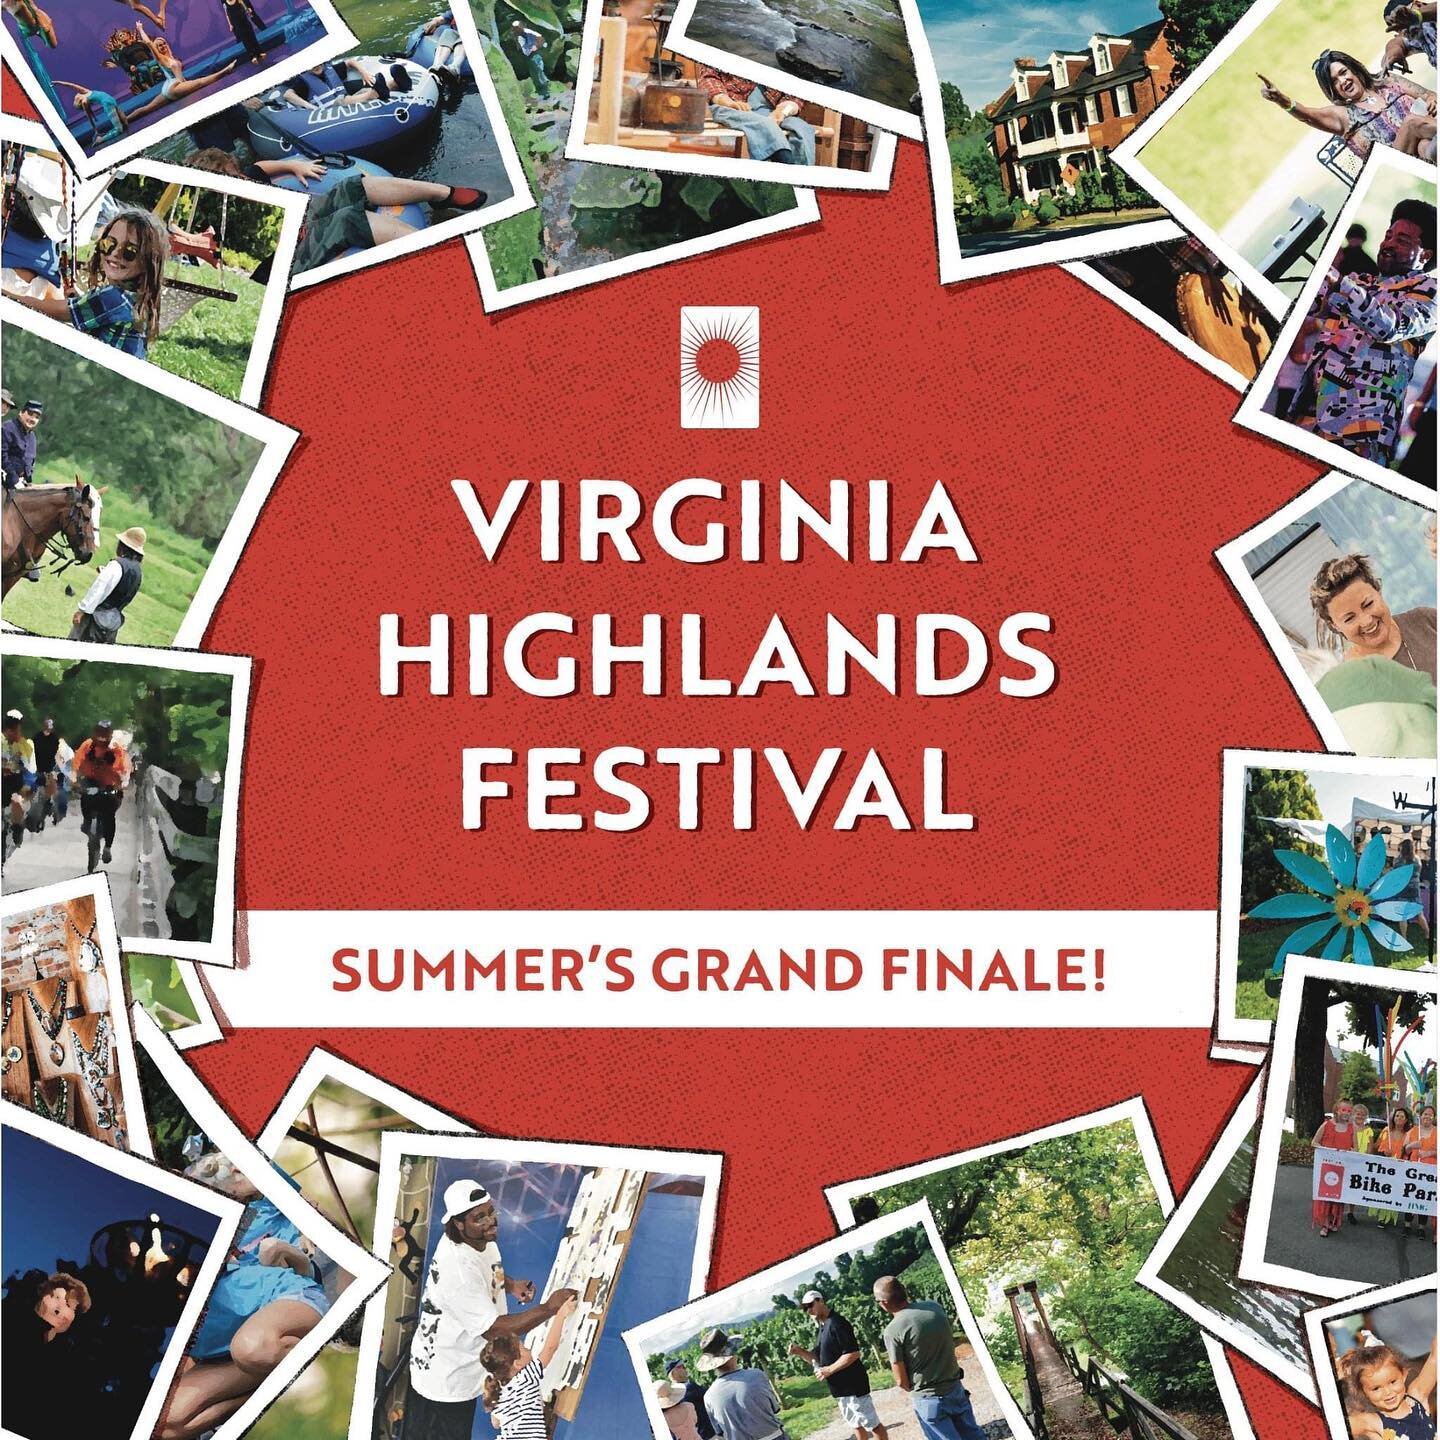 The Virginia Highlands Festival is Summer's Grand Finale!! July 22 - 31, 2022.

#virginiaisforlovers 
#visitswva 
#visitabingdonva 
#ilovefestivals 
#shareabingdonva 
#explorevirginia 
#virginiahistory 
#southwestvirginia